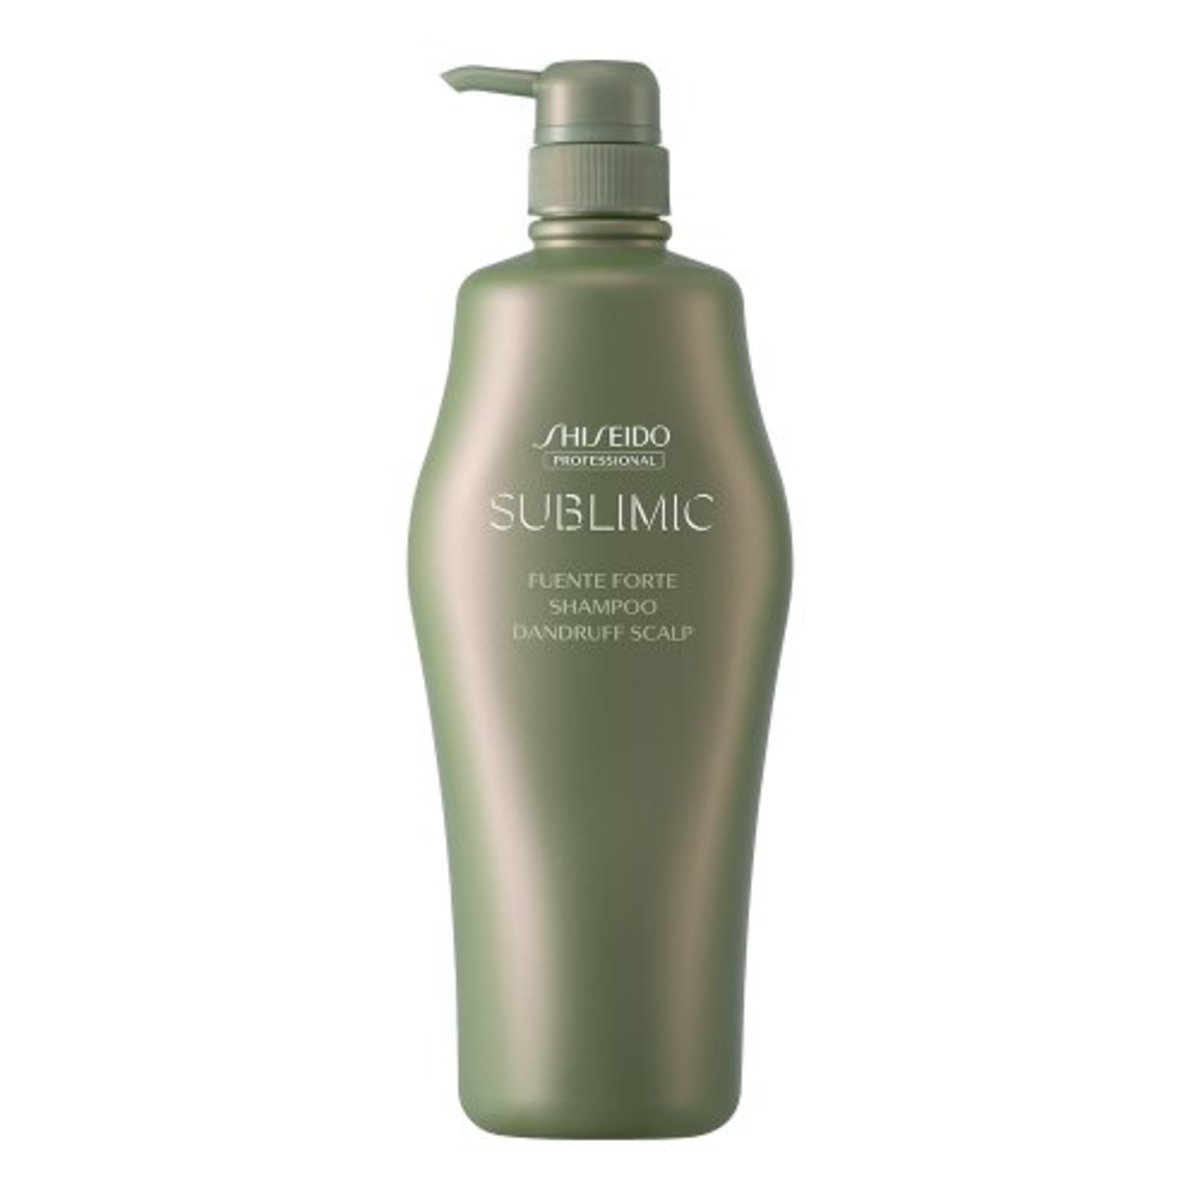 Shiseido Professional | 資生堂 Sublimic Fuente Forte Shampoo (Dandruff